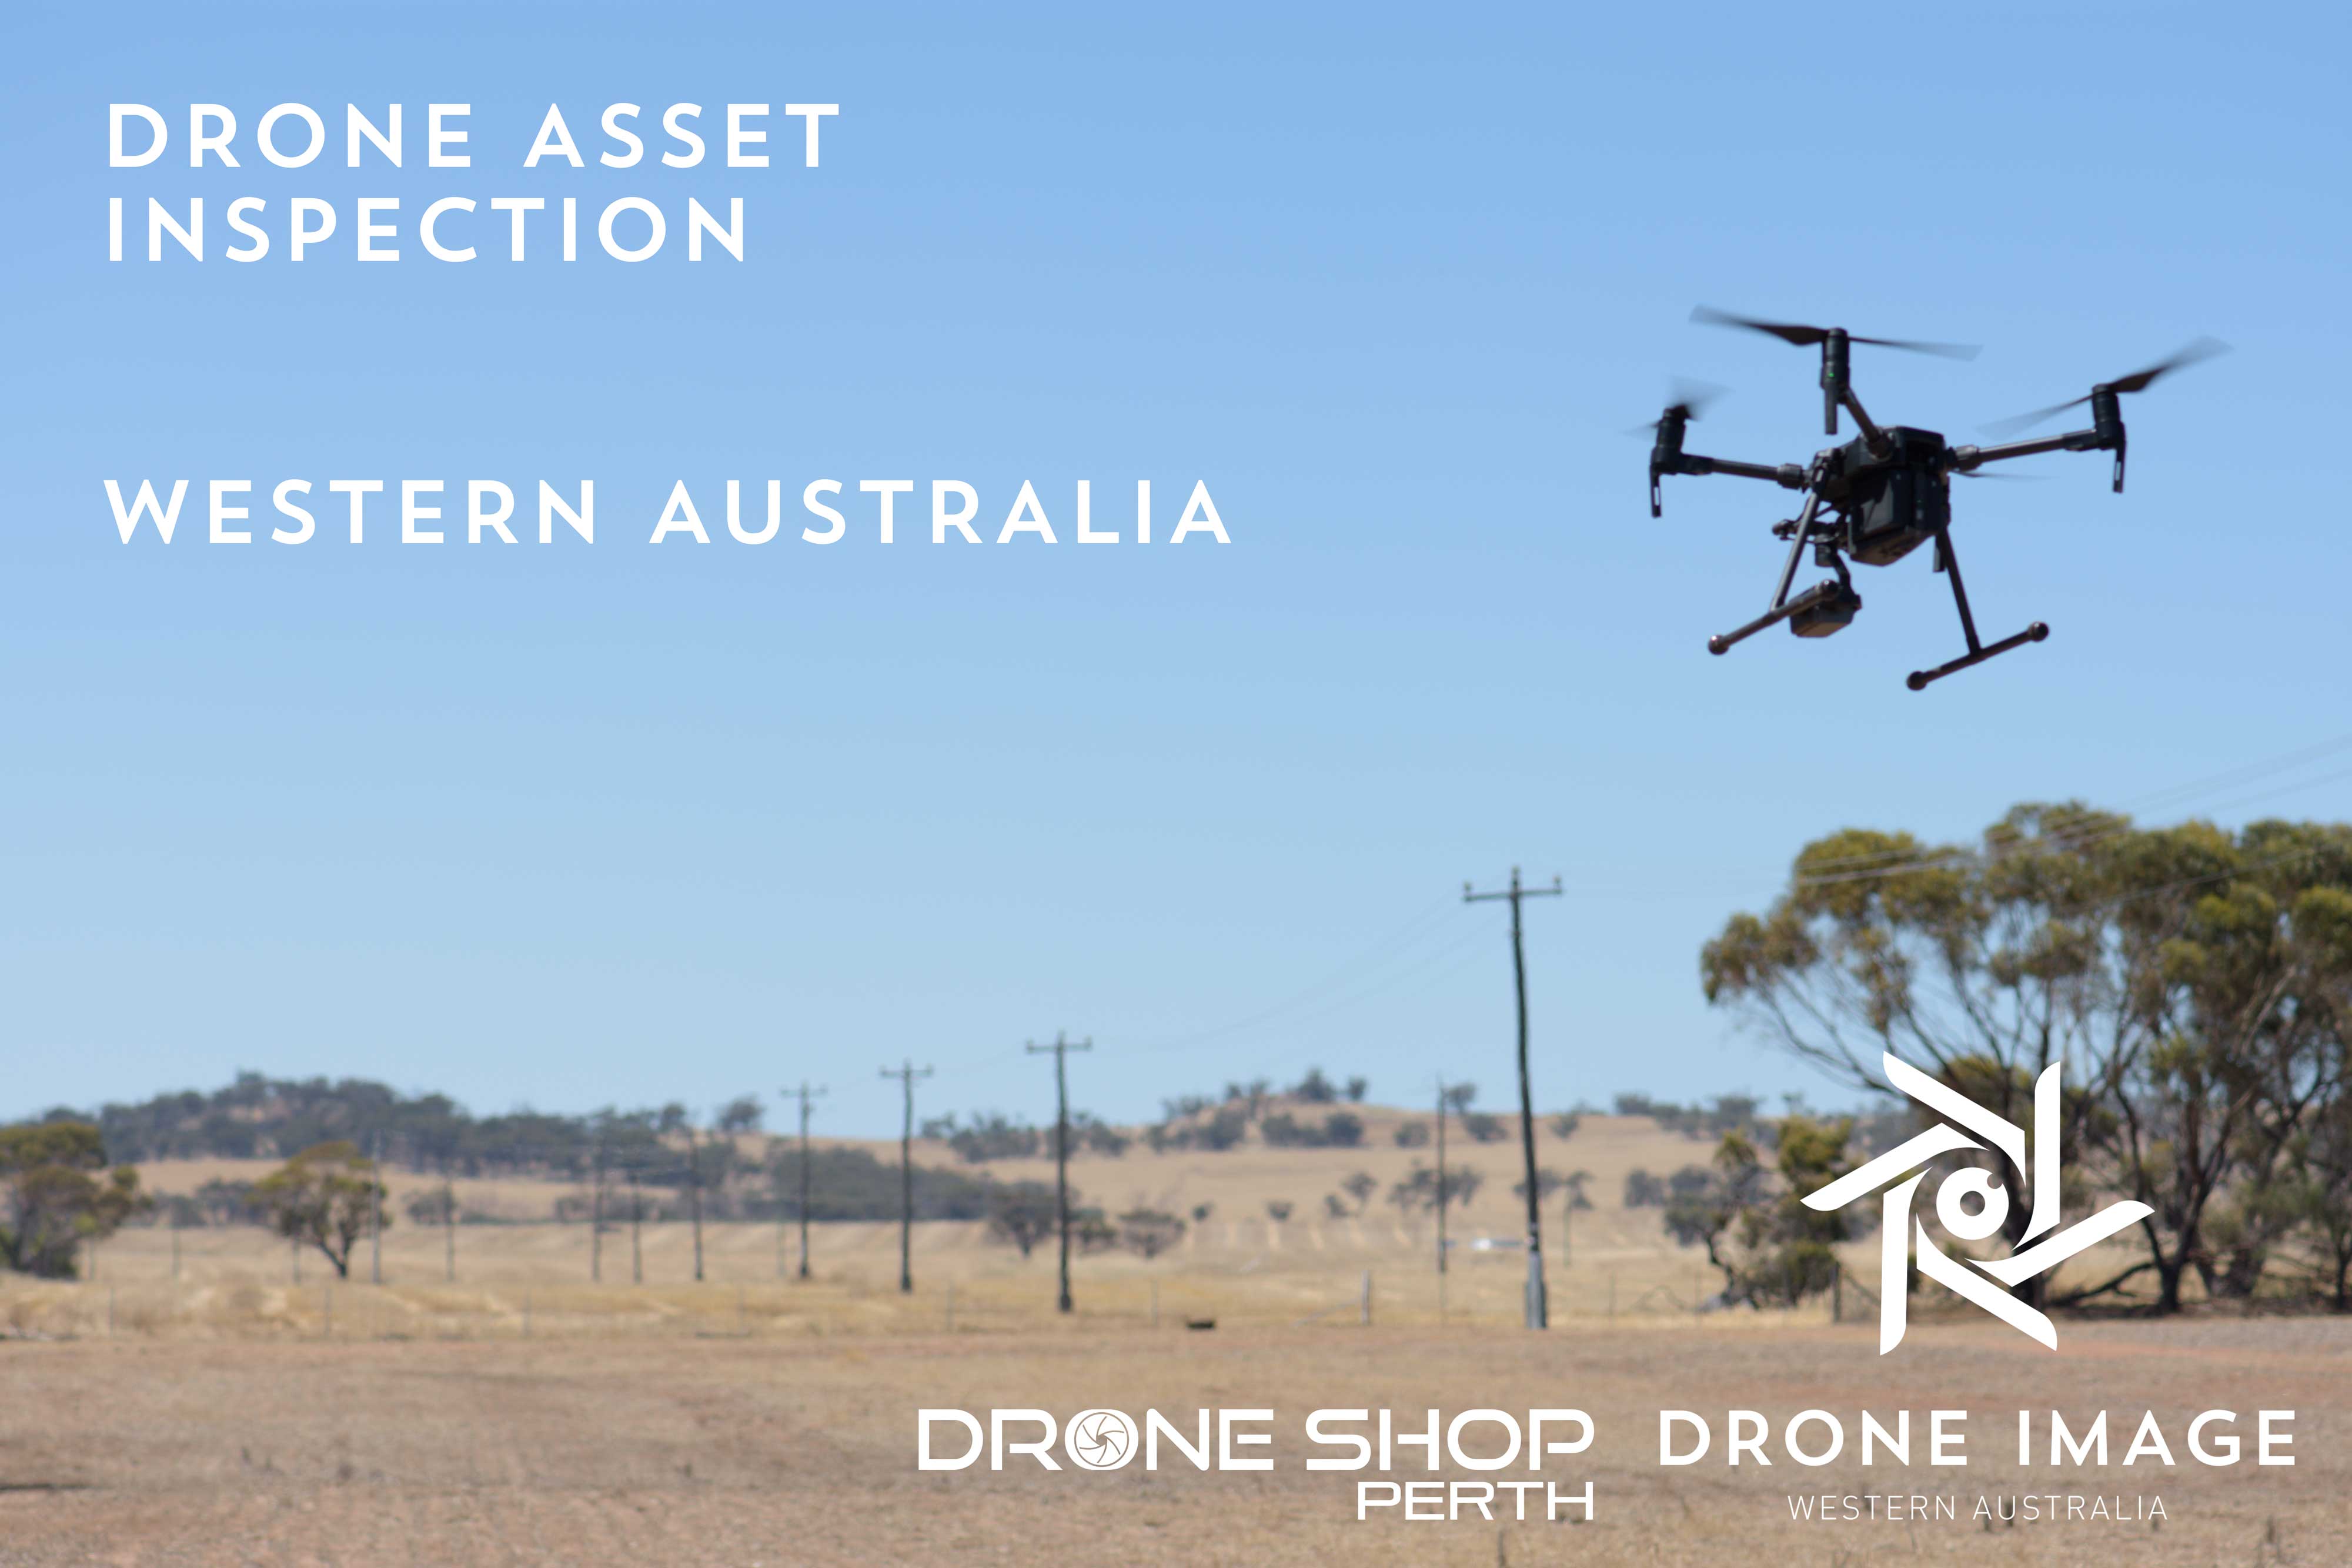 Drone Image Drone Shop Perth Power Line Drone Asset Inspection Western Australia